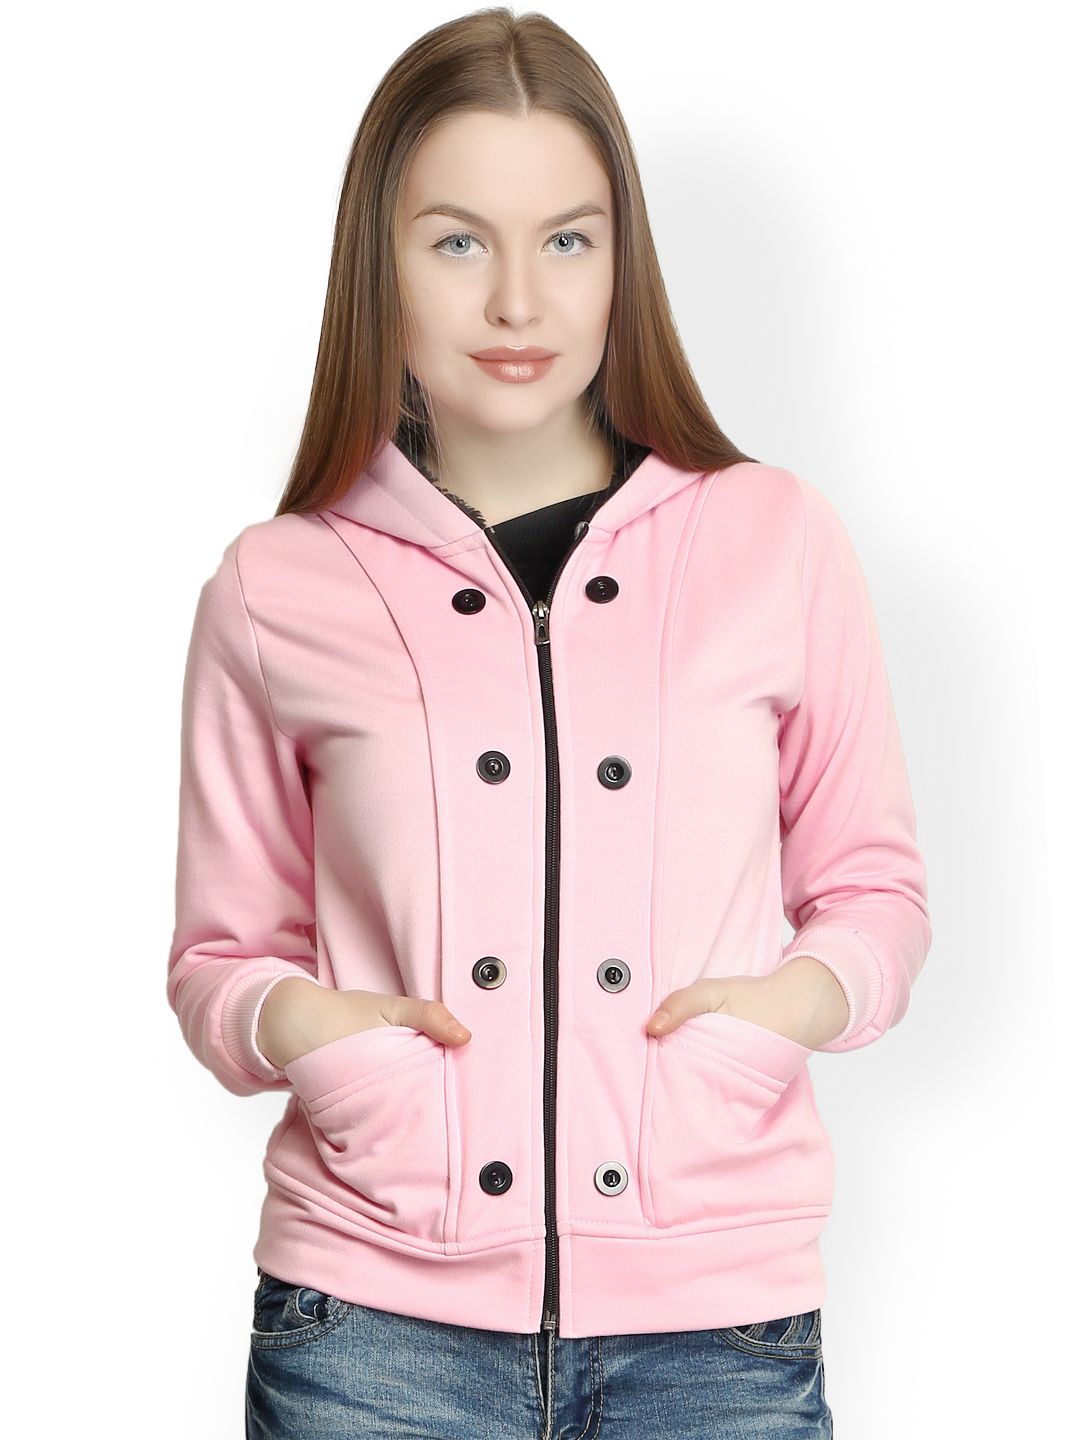 Belle Fille Women Pink Hooded Sweatshirt Price in India